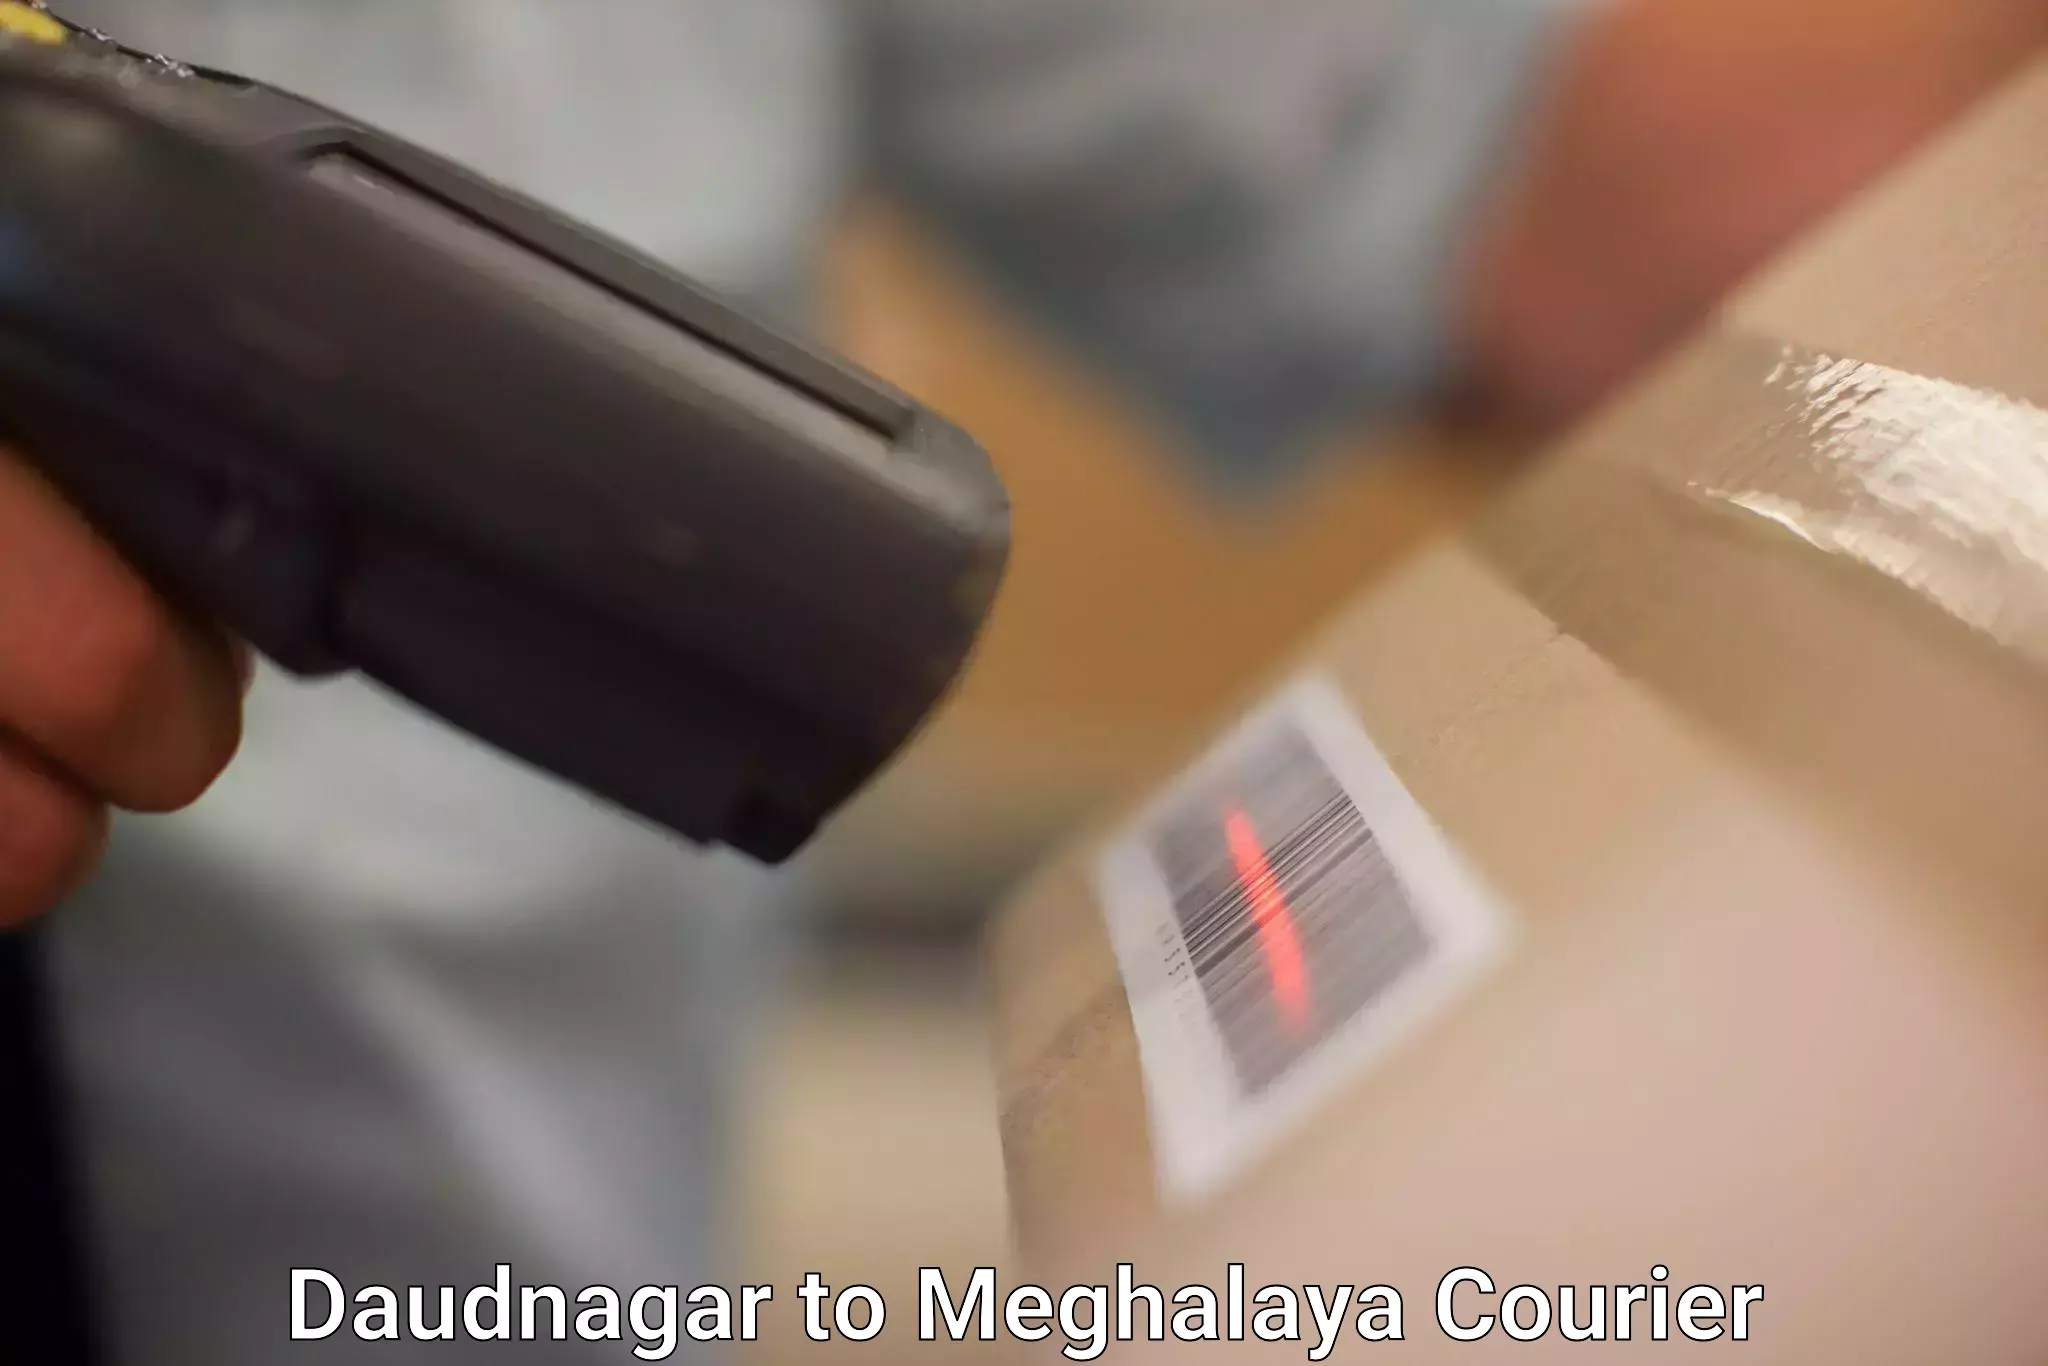 Tech-enabled shipping Daudnagar to Shillong